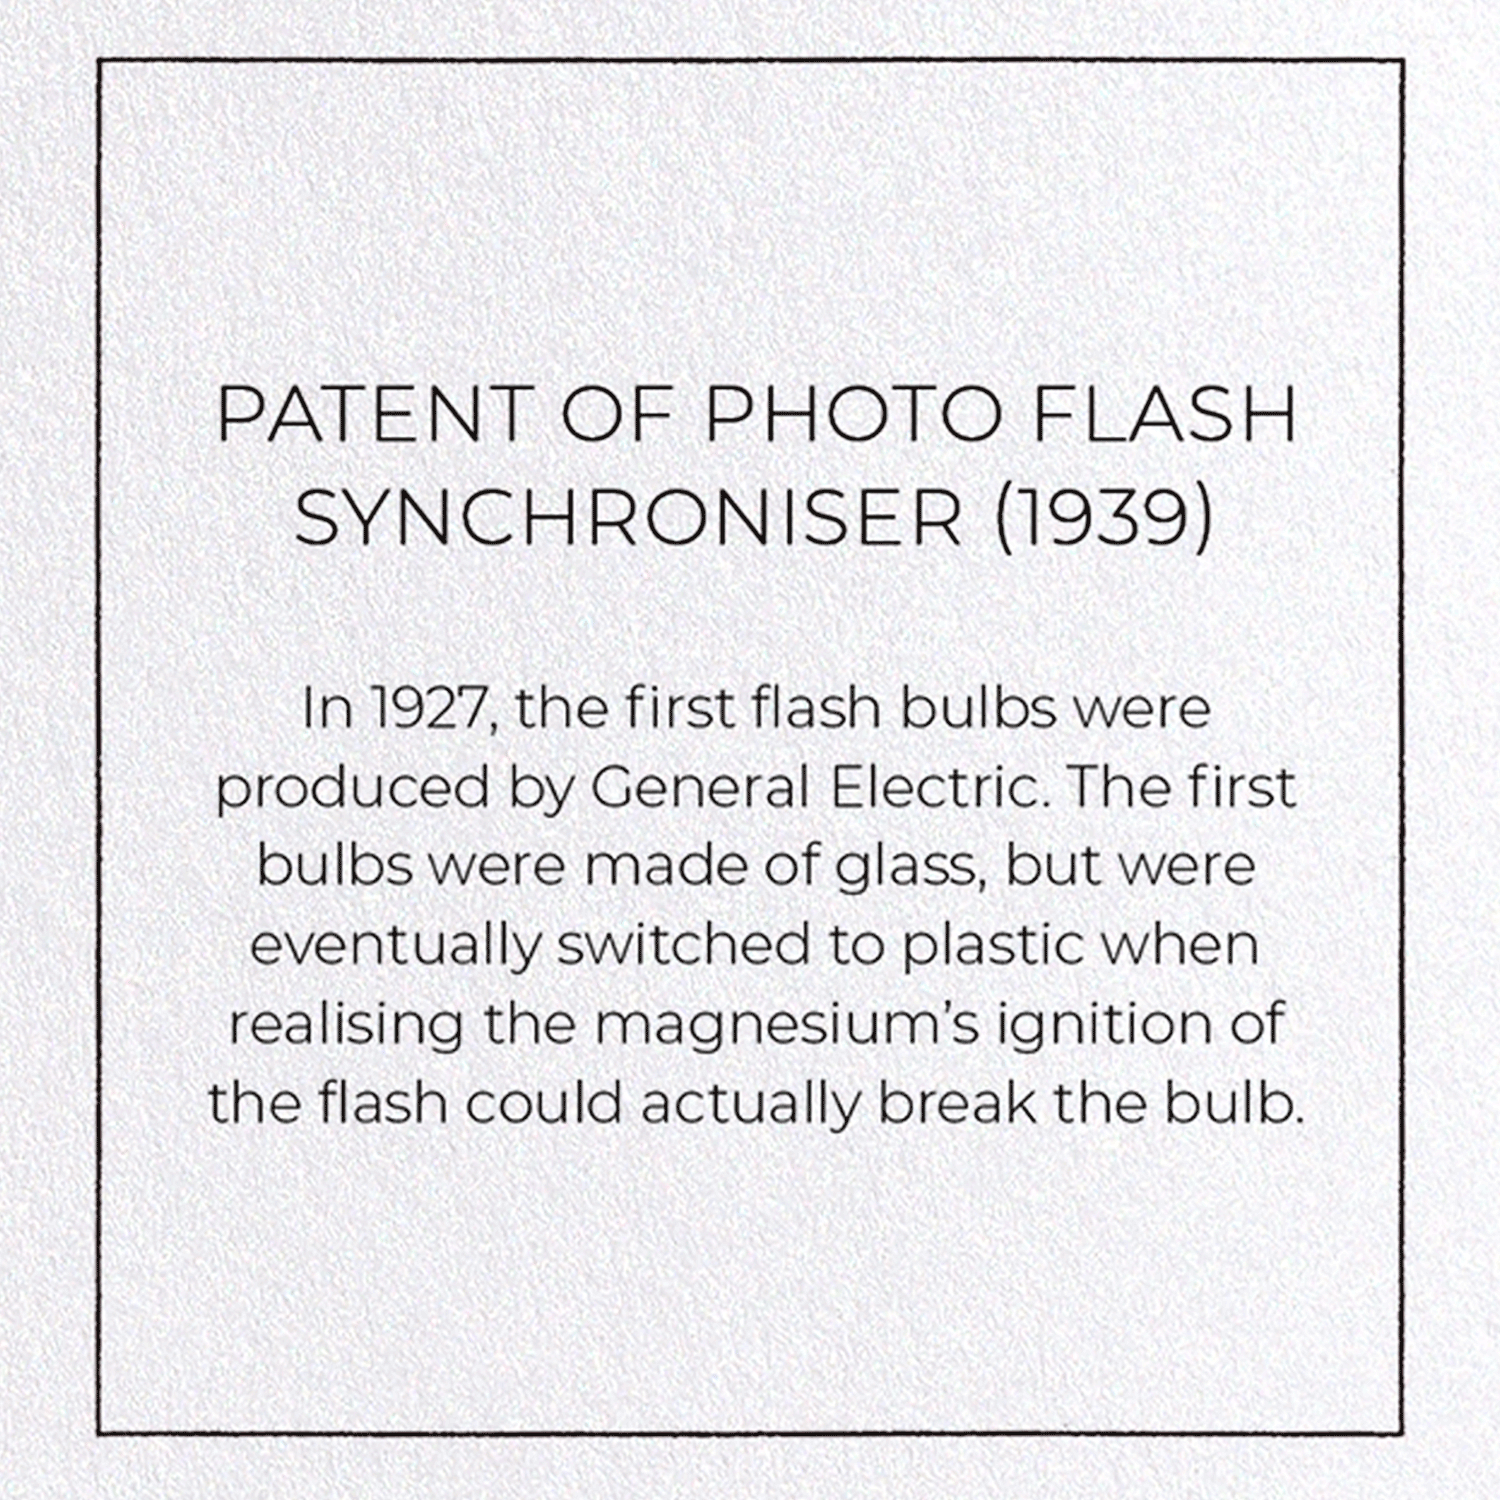 PATENT OF PHOTO FLASH SYNCHRONISER (1939)